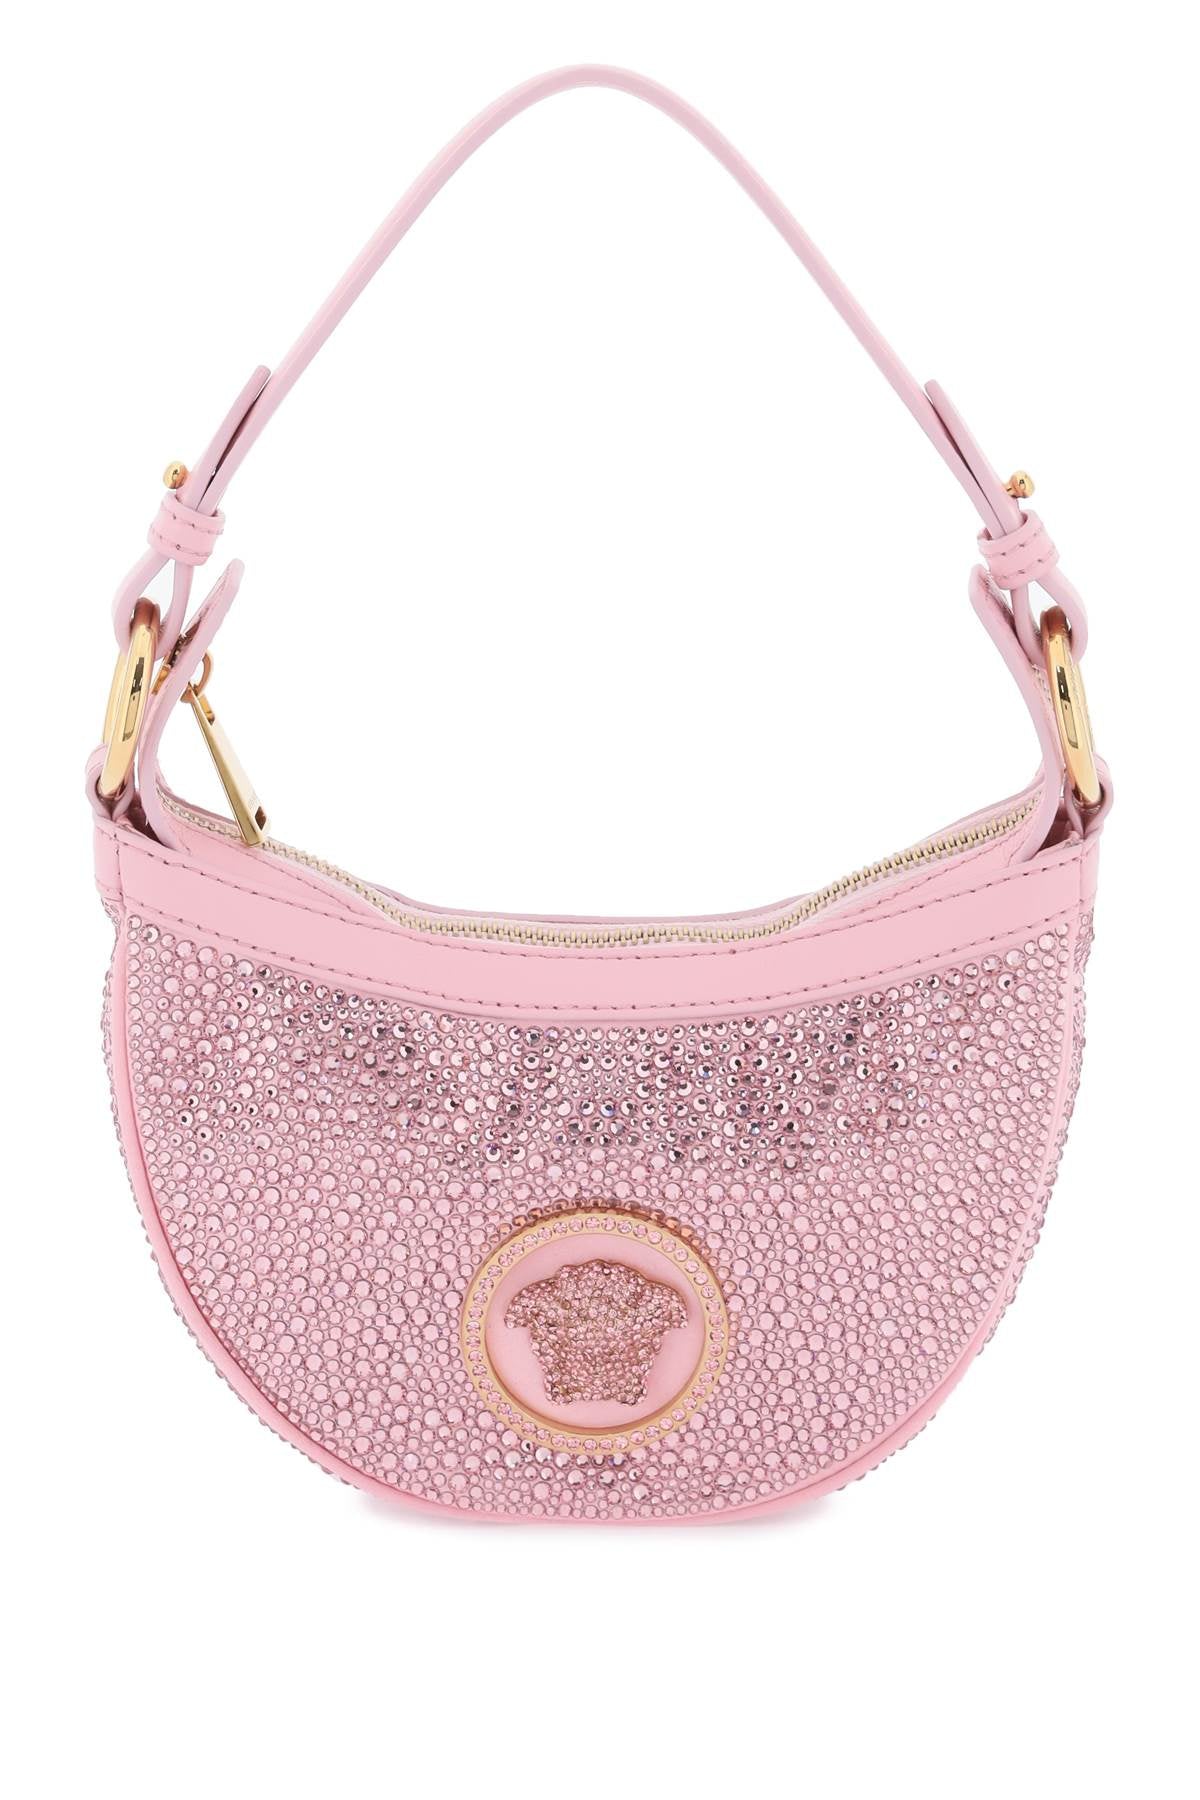 Elegant Pink Mini Hobo Handbag with Crystals and Iconic Medusa by a Leading Fashion Designer